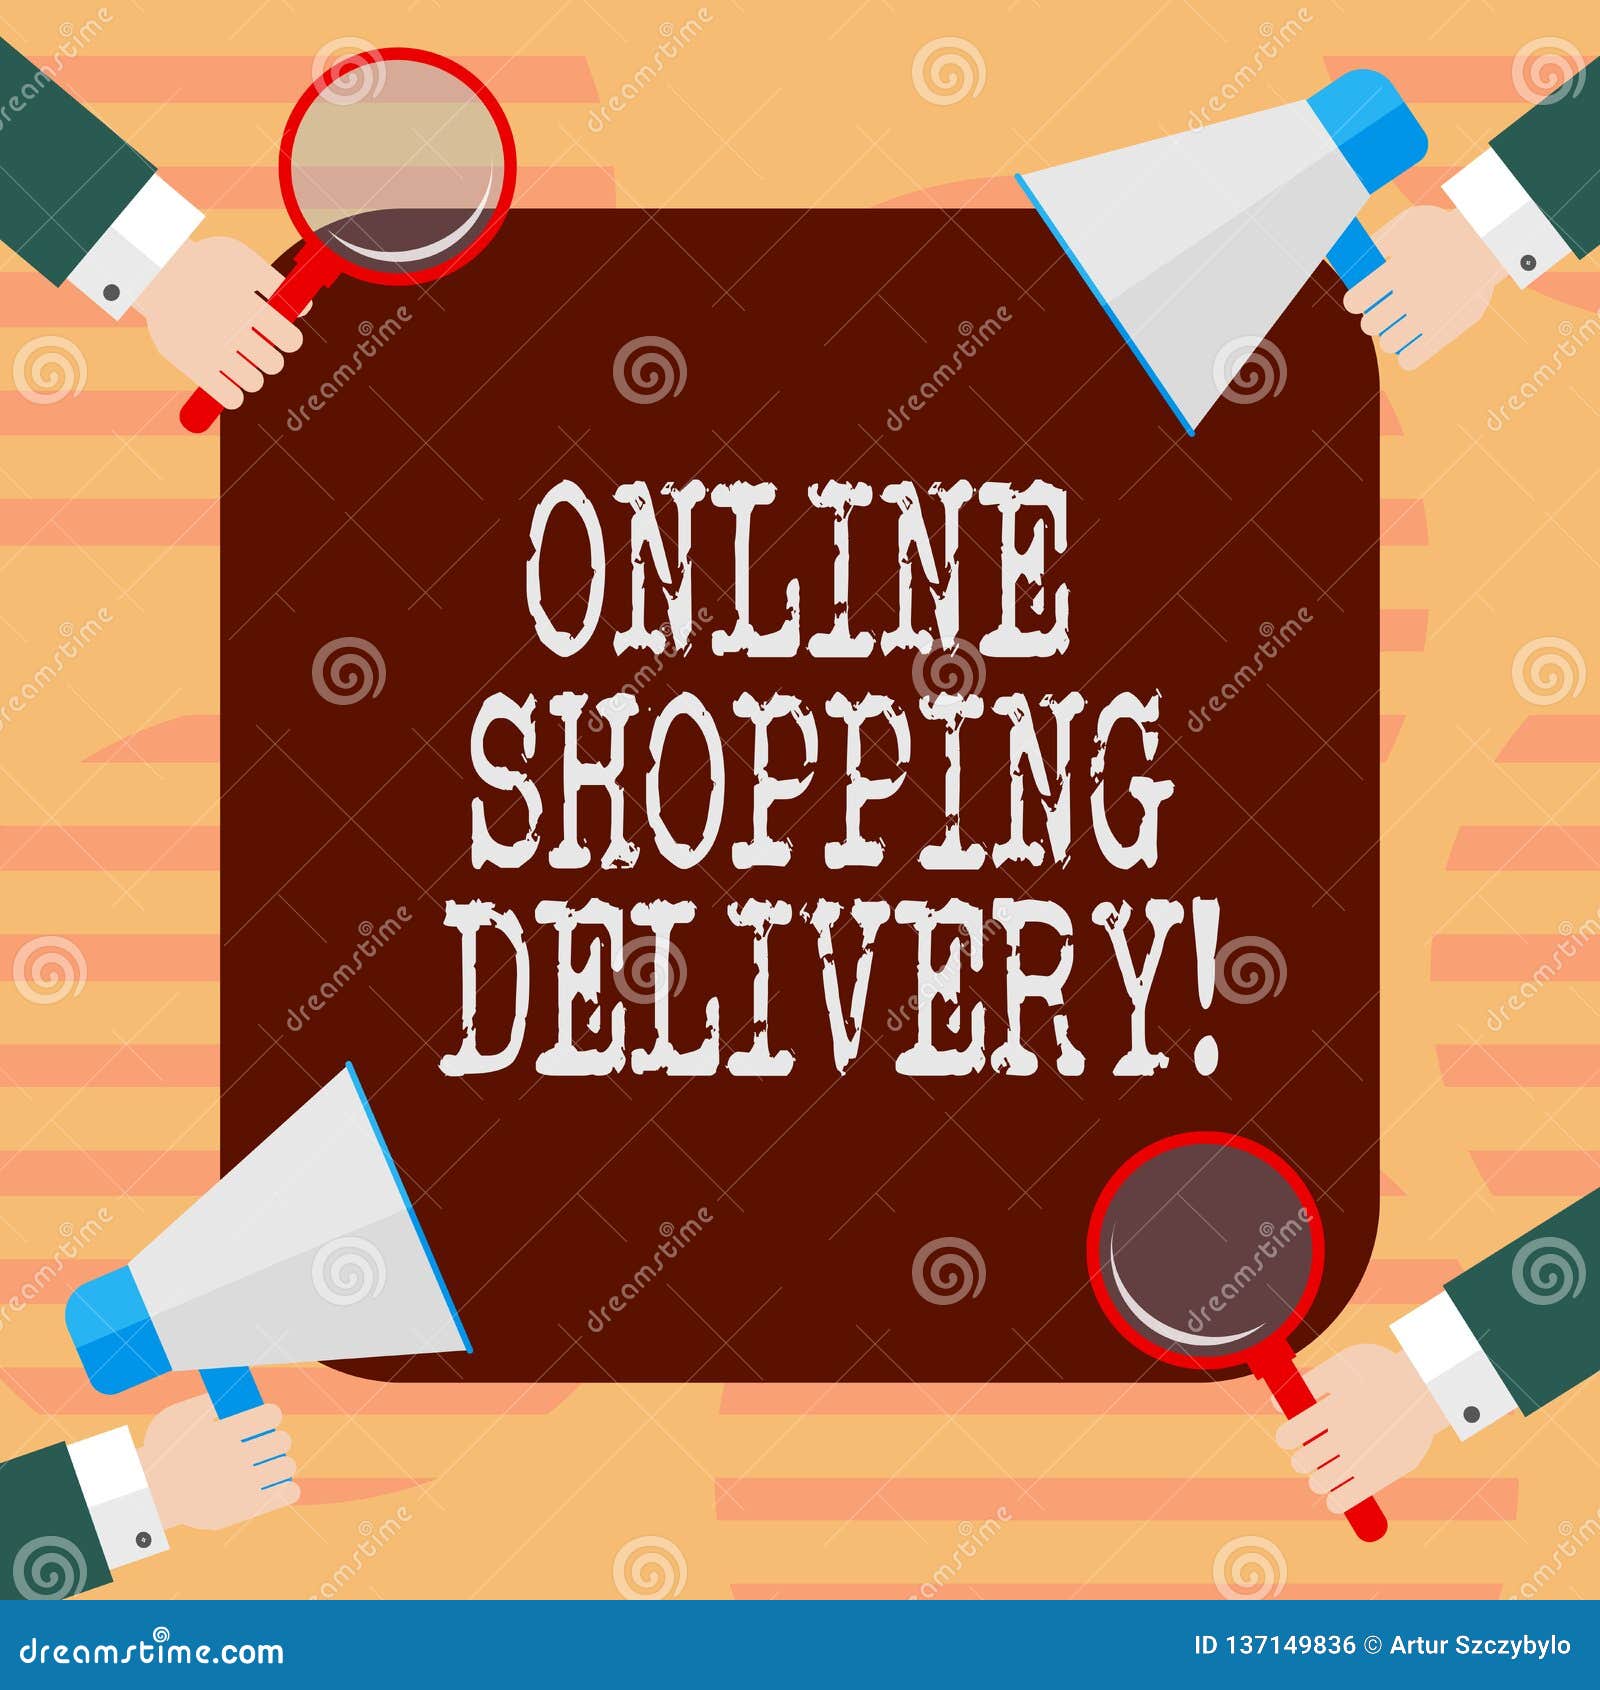 essay online shopping